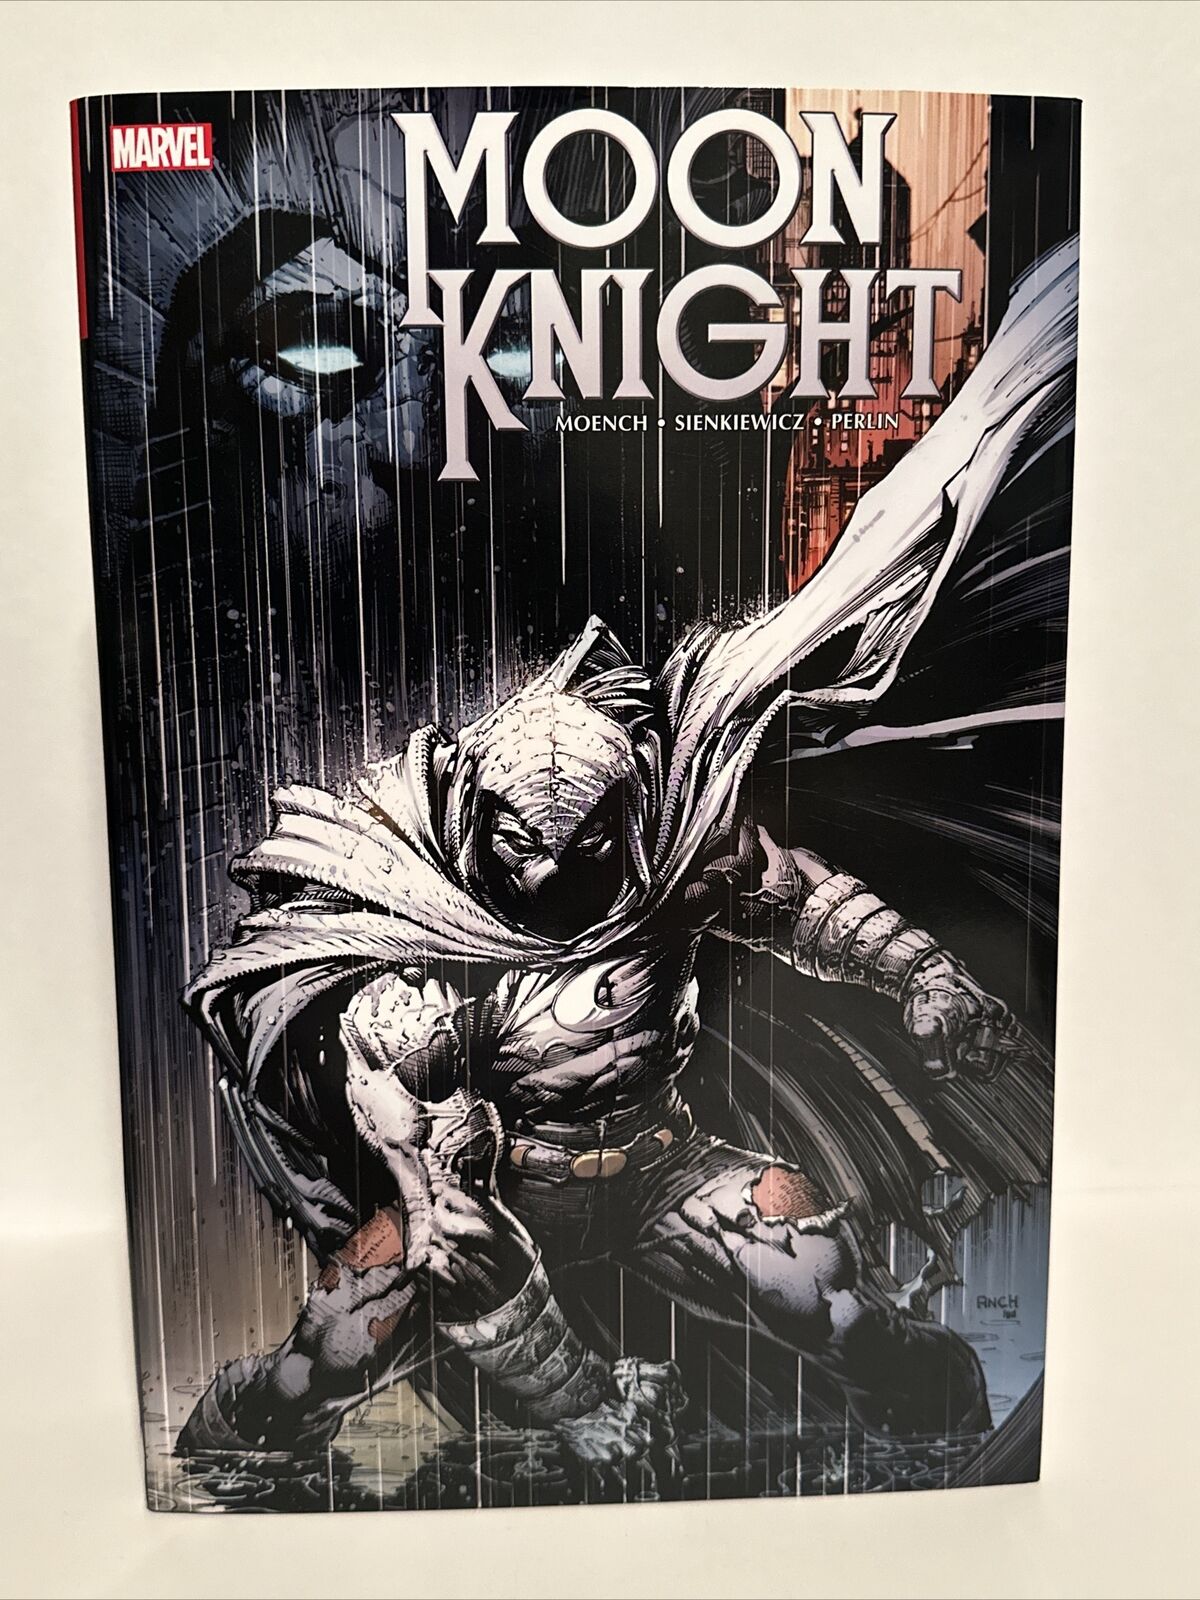 Moon Knight Omnibus #1 (Marvel, 2020) HC Sienkiewicz art